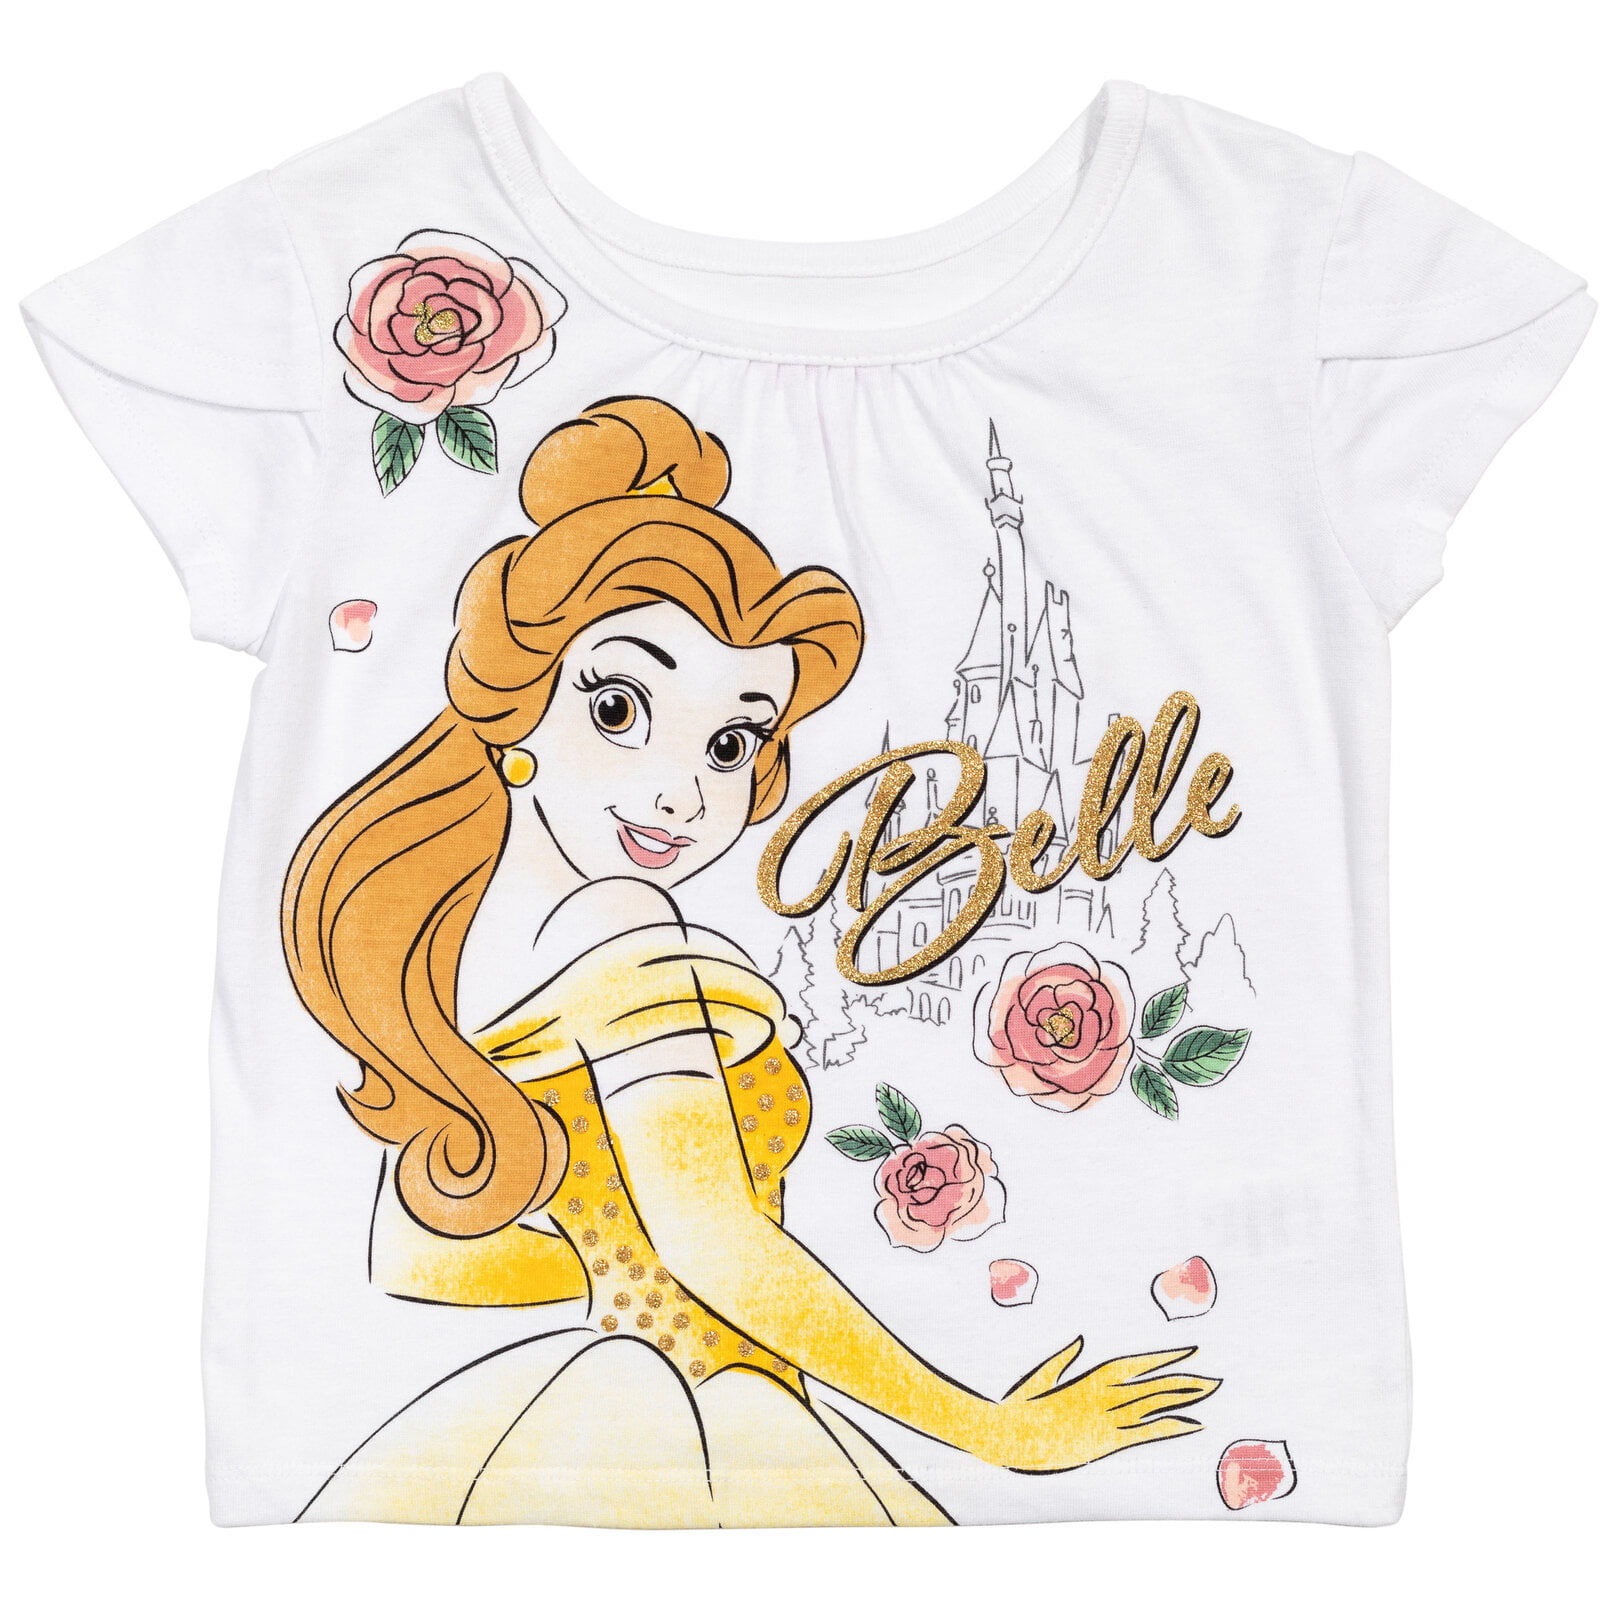 Outfit Tulle and Girls T-Shirt Big Kid Princess Set Toddler to Mesh 3 Piece Disney Ariel Skirt Scrunchie Toddler